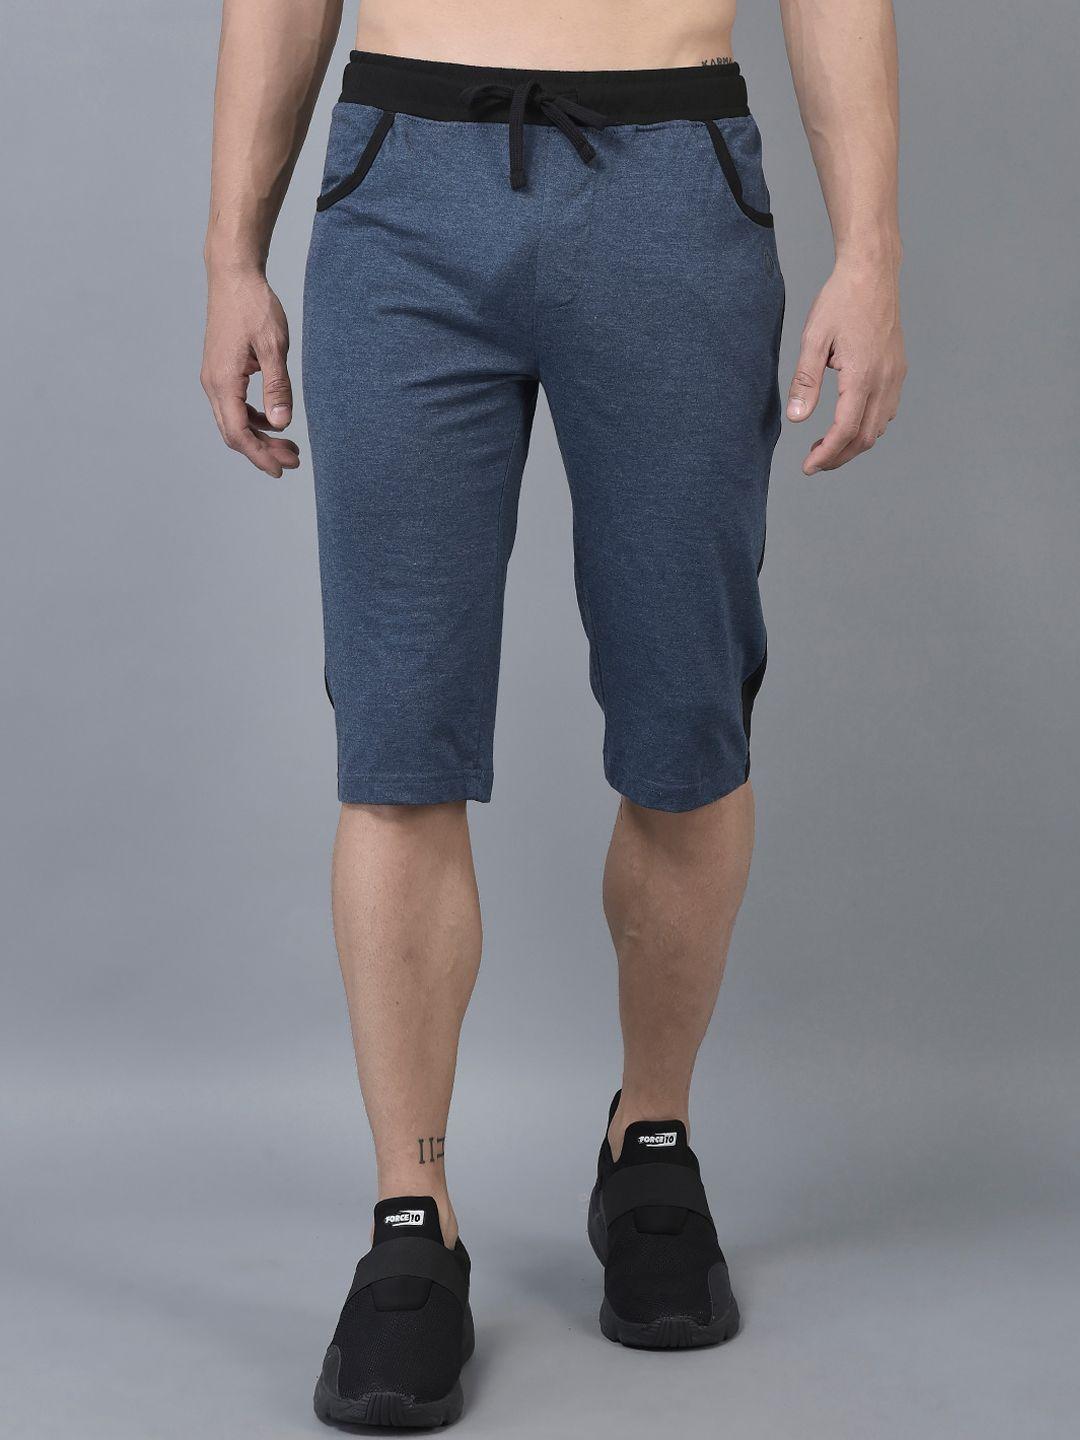 dollar men colourblocked mid-rise cotton sports shorts